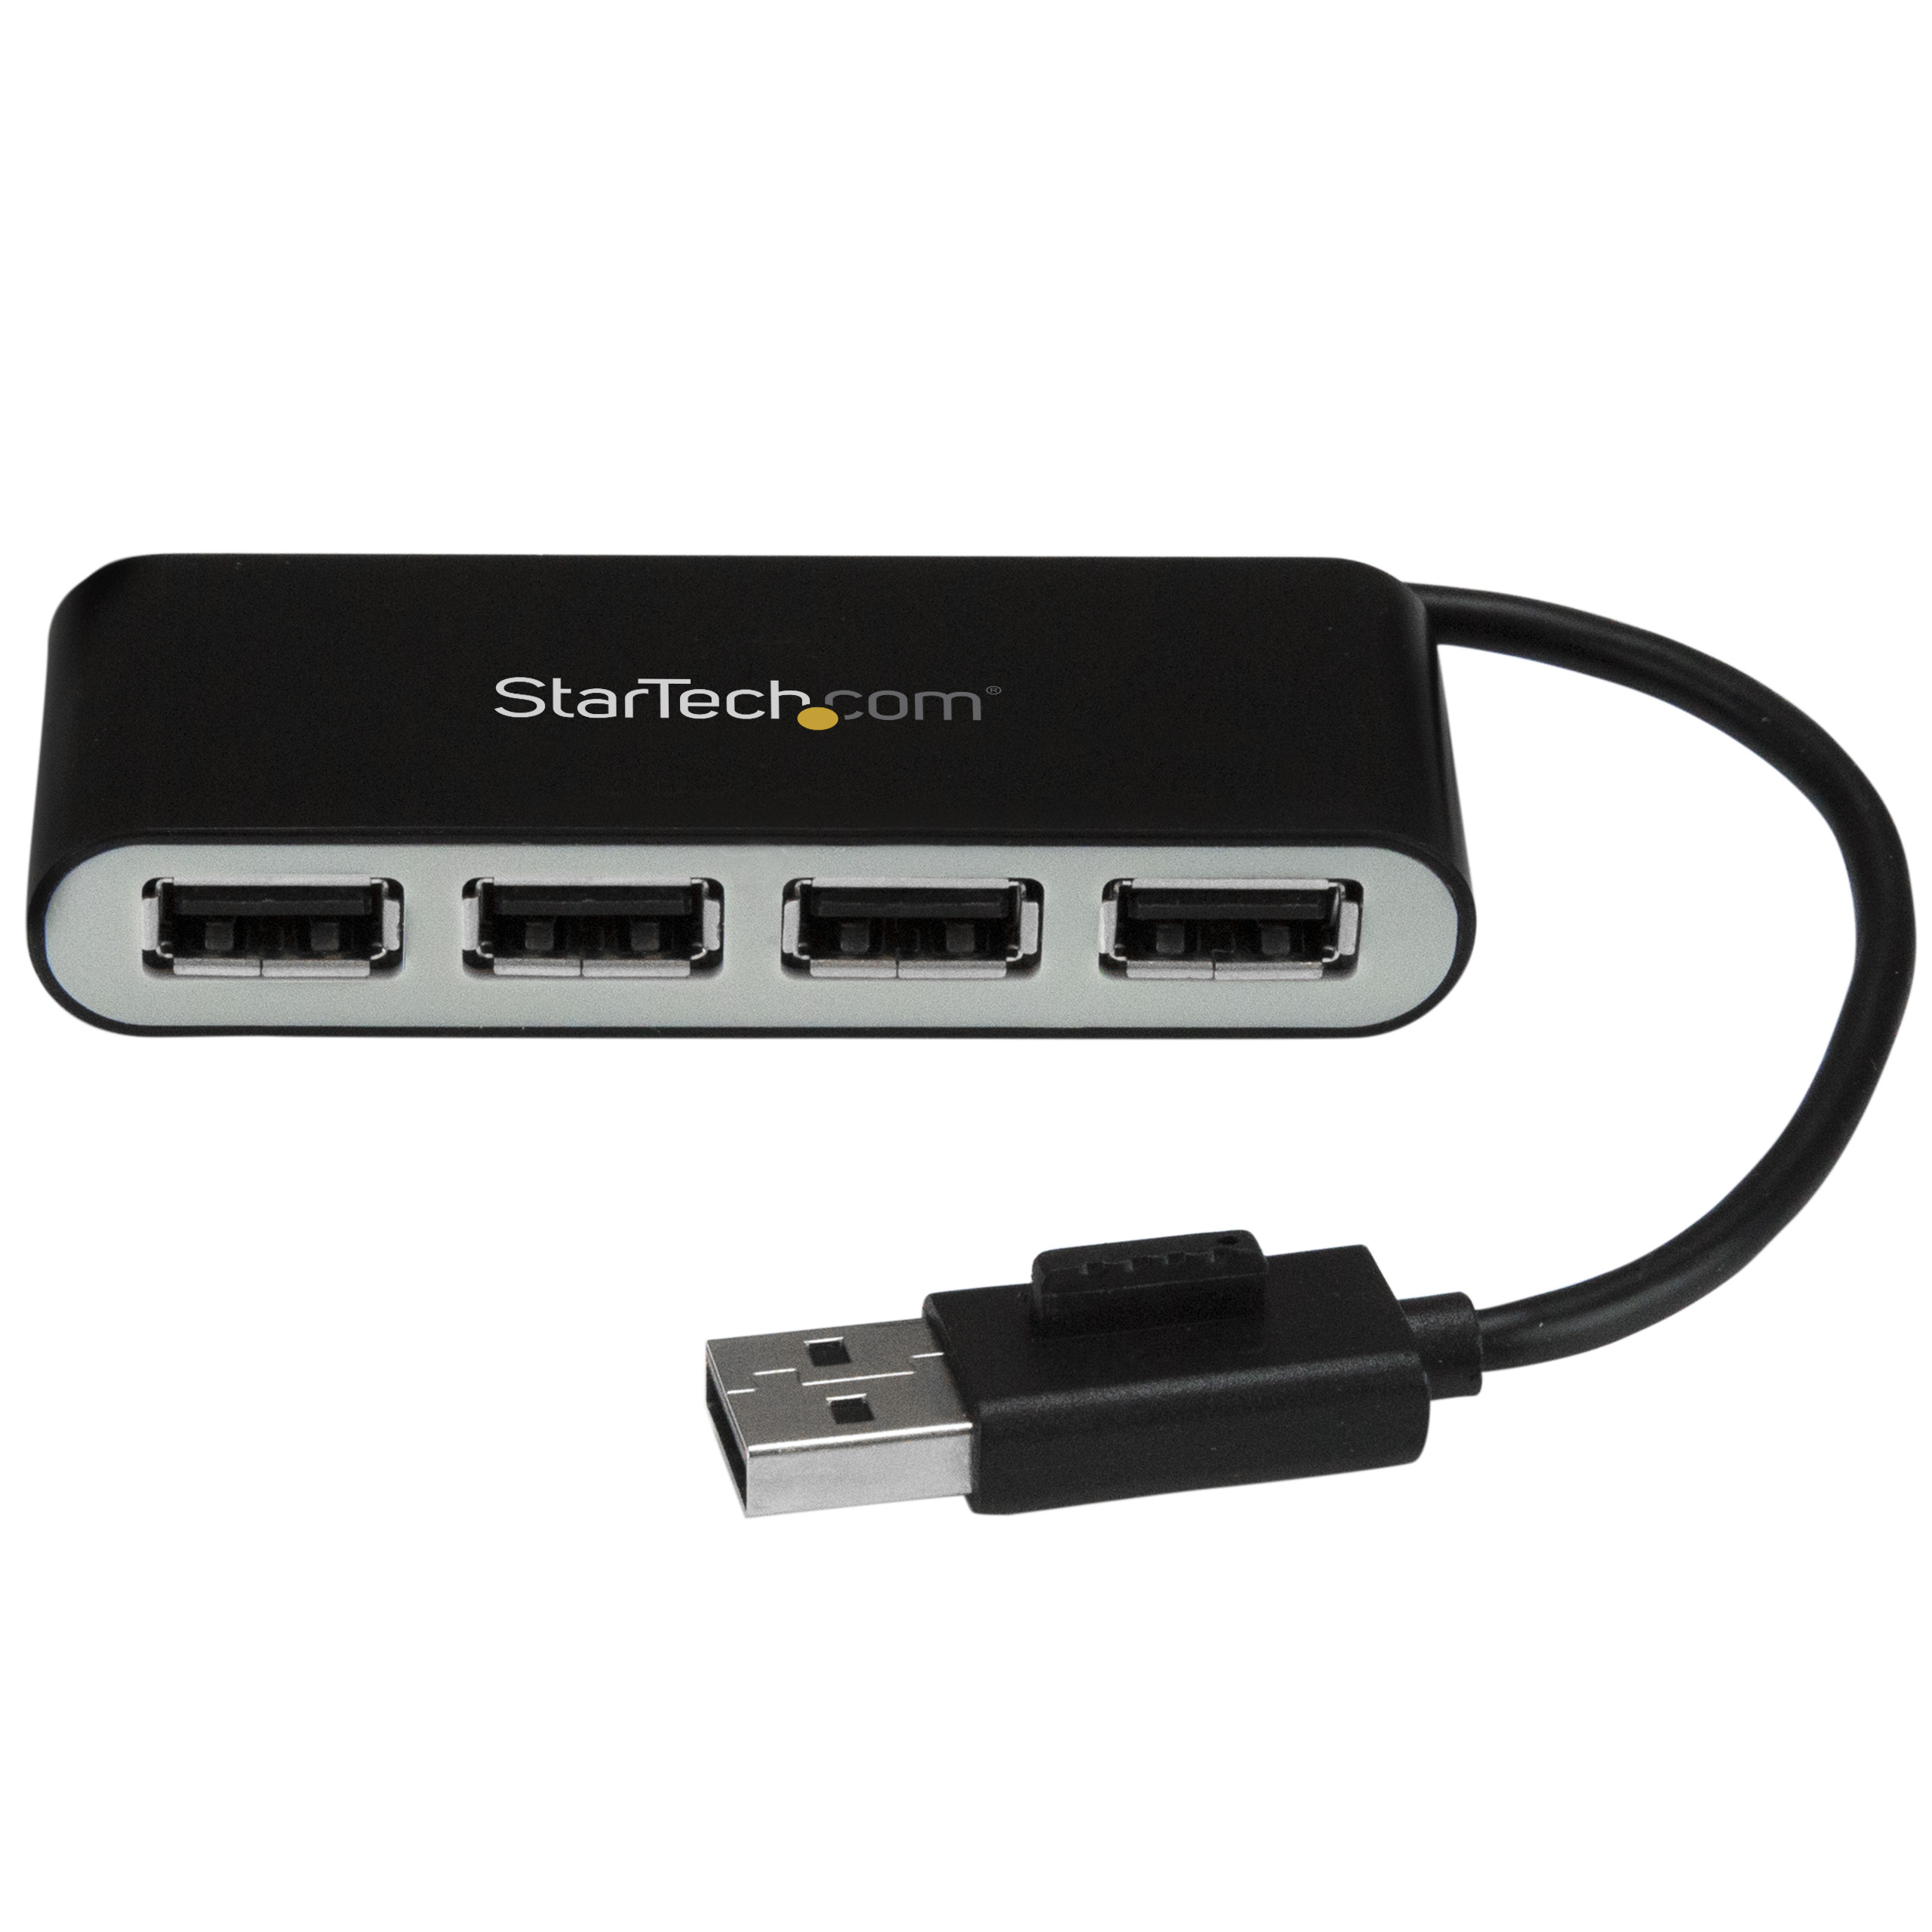 StarTech.com 4 Port USB 2.0 Hub - USB Bus Powered - Portable Multi Port USB 2.0 Splitter and Expander Hub - Small Travel USB Hub - image 1 of 6